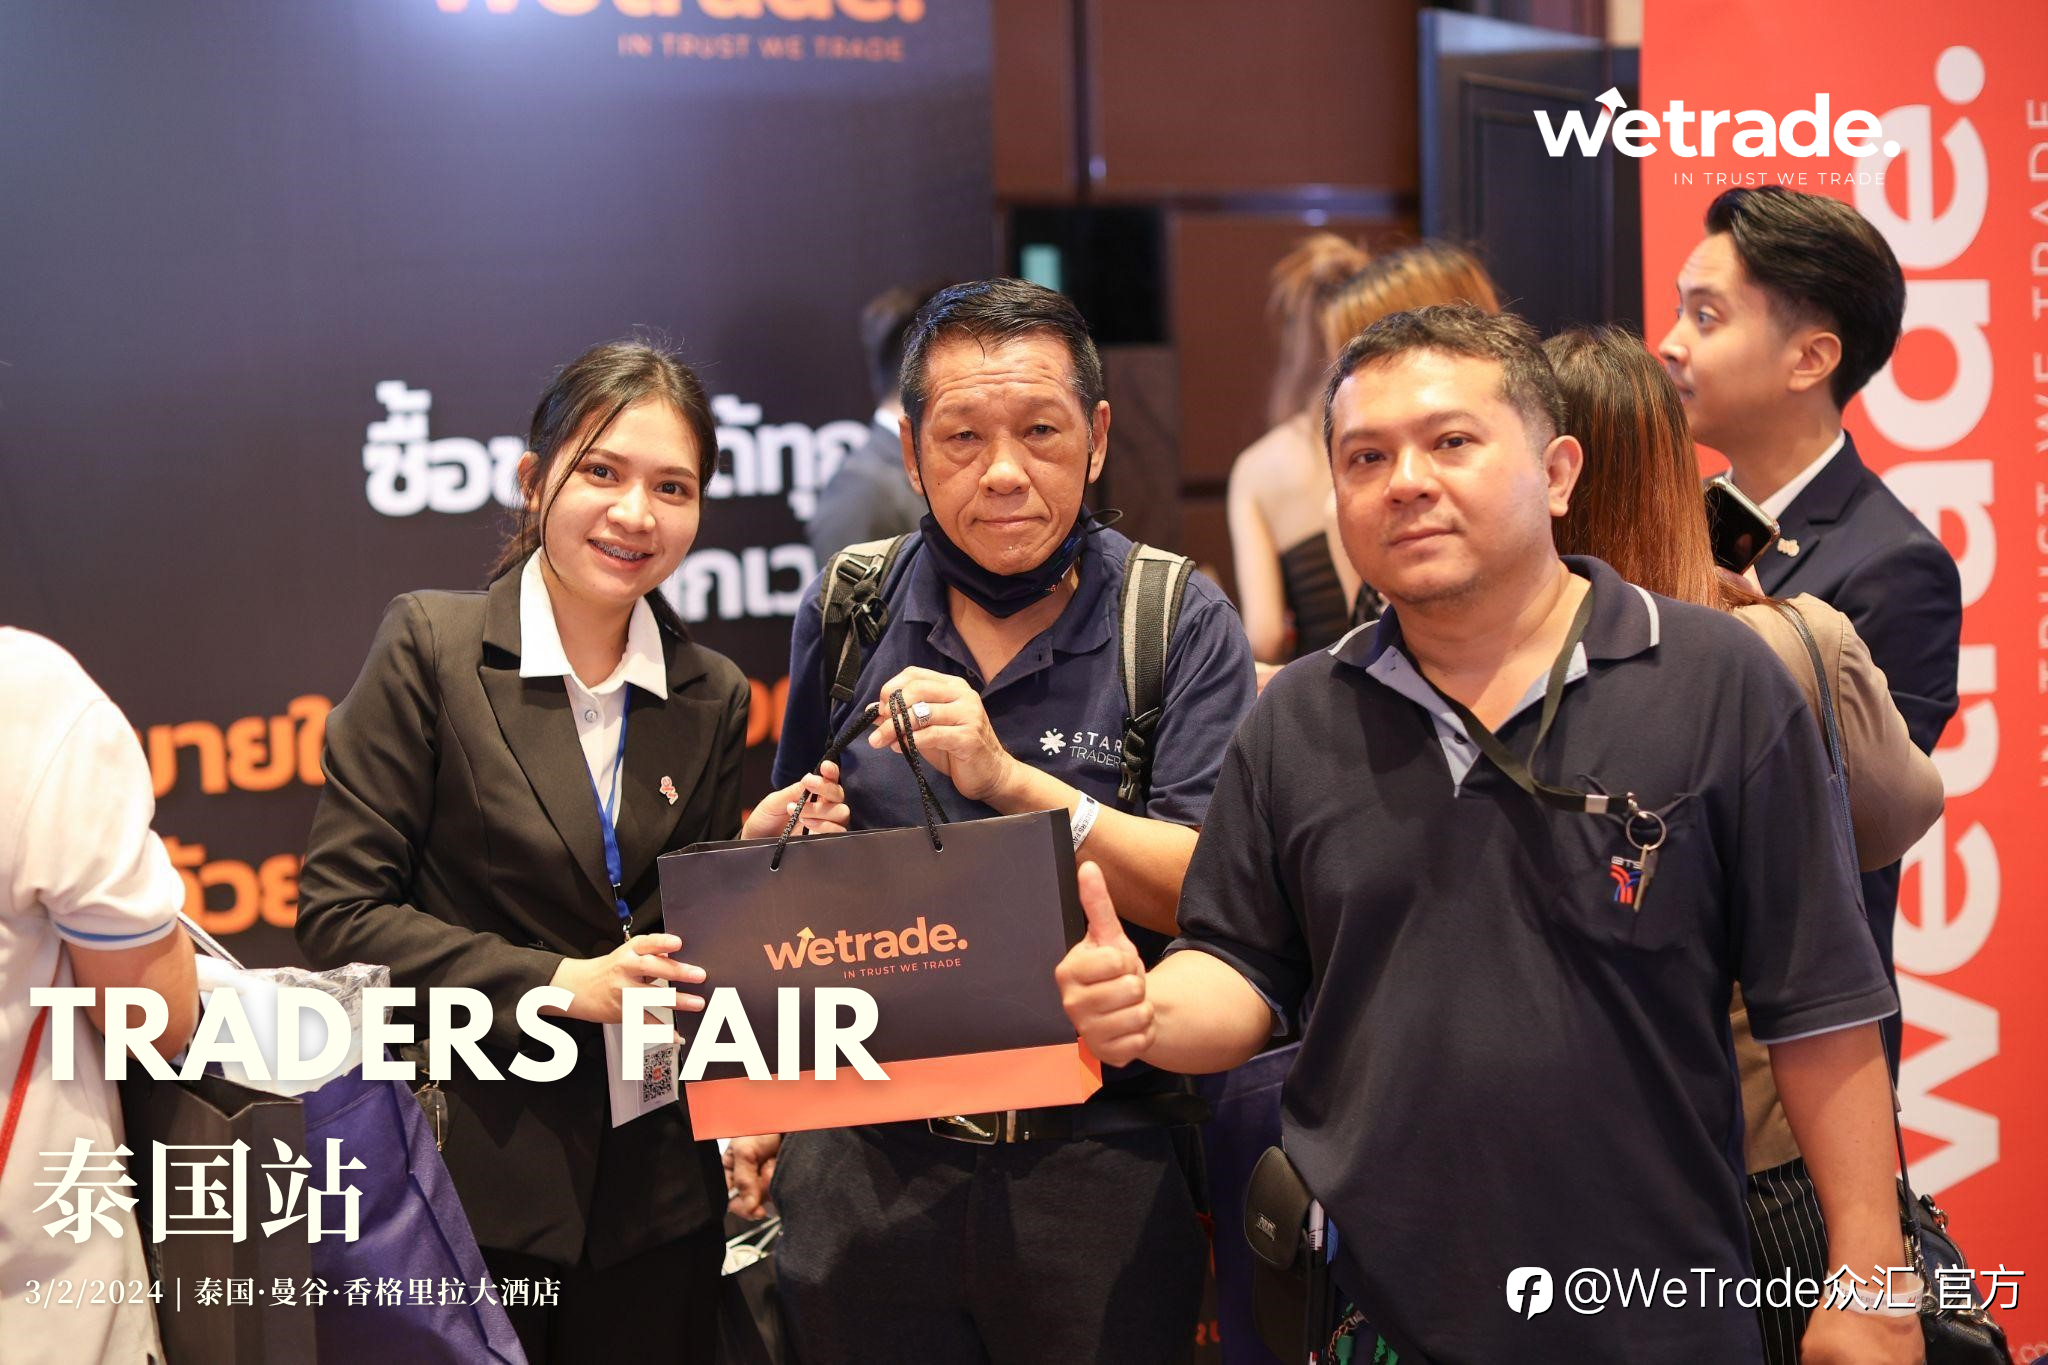 WeTrade在曼谷Traders Fair展会亮相，彰显全球拓展的坚实步伐